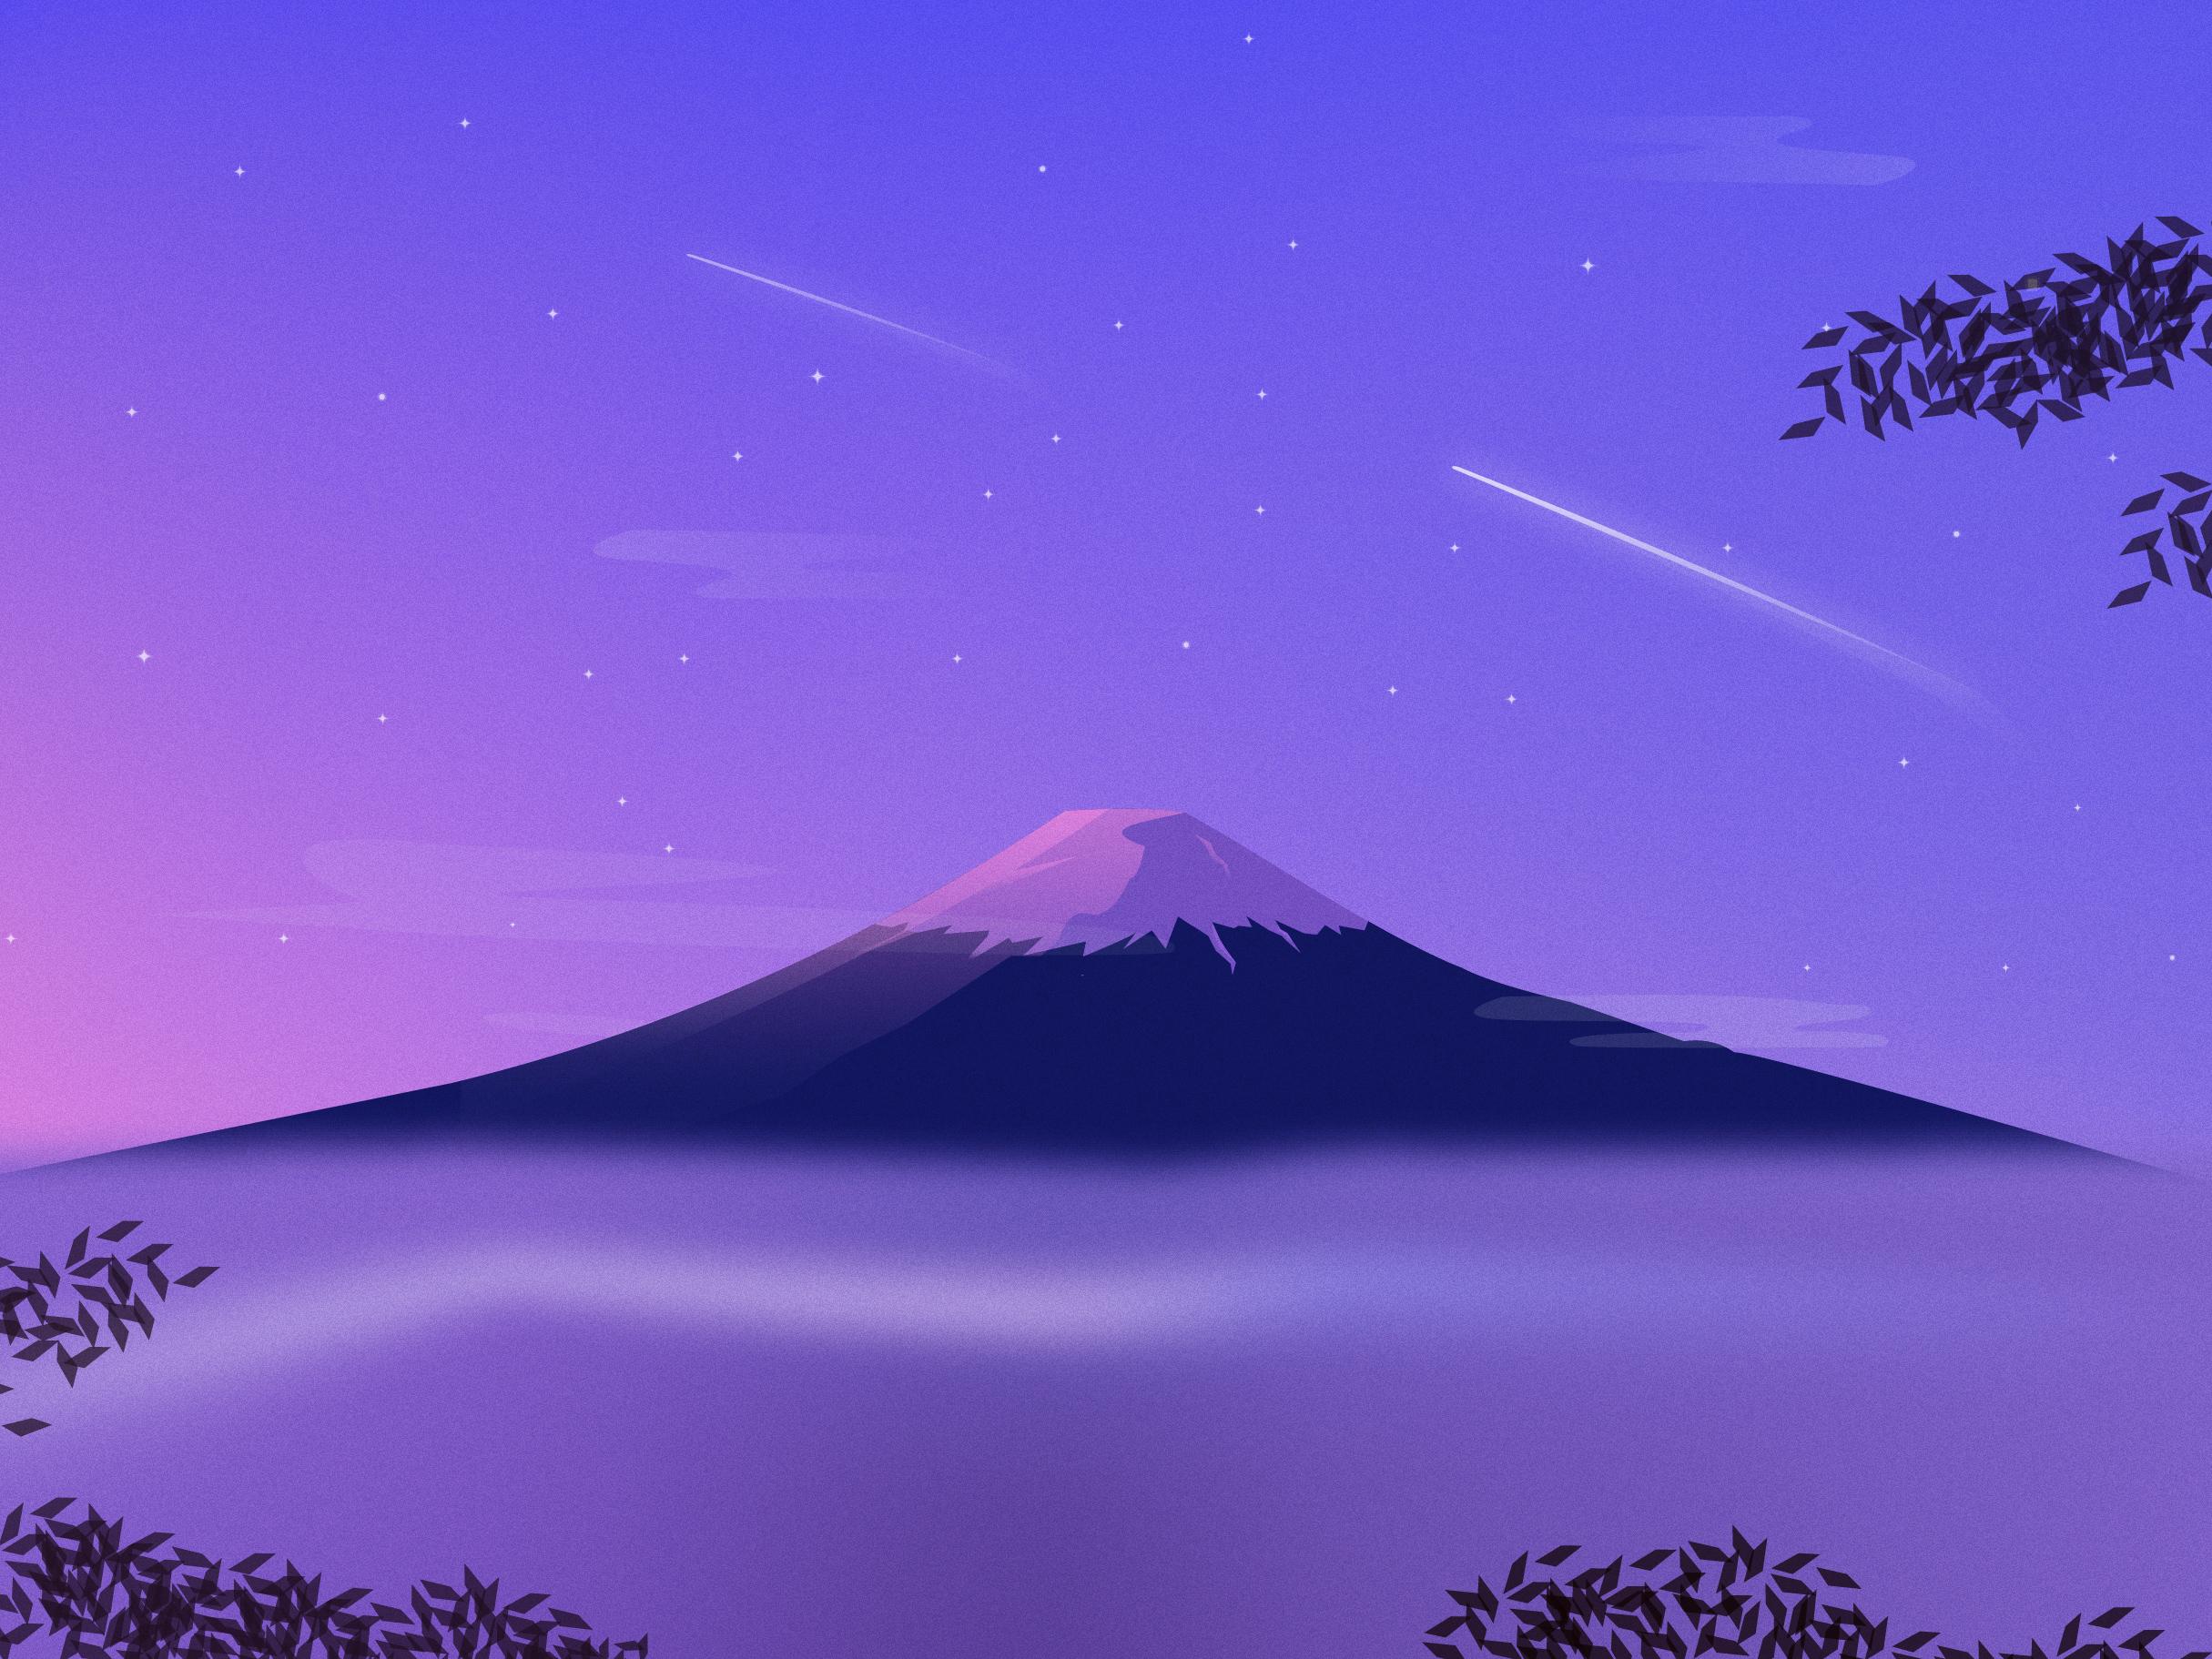 Mount Fuji Minimal, HD Artist, 4k Wallpaper, Image